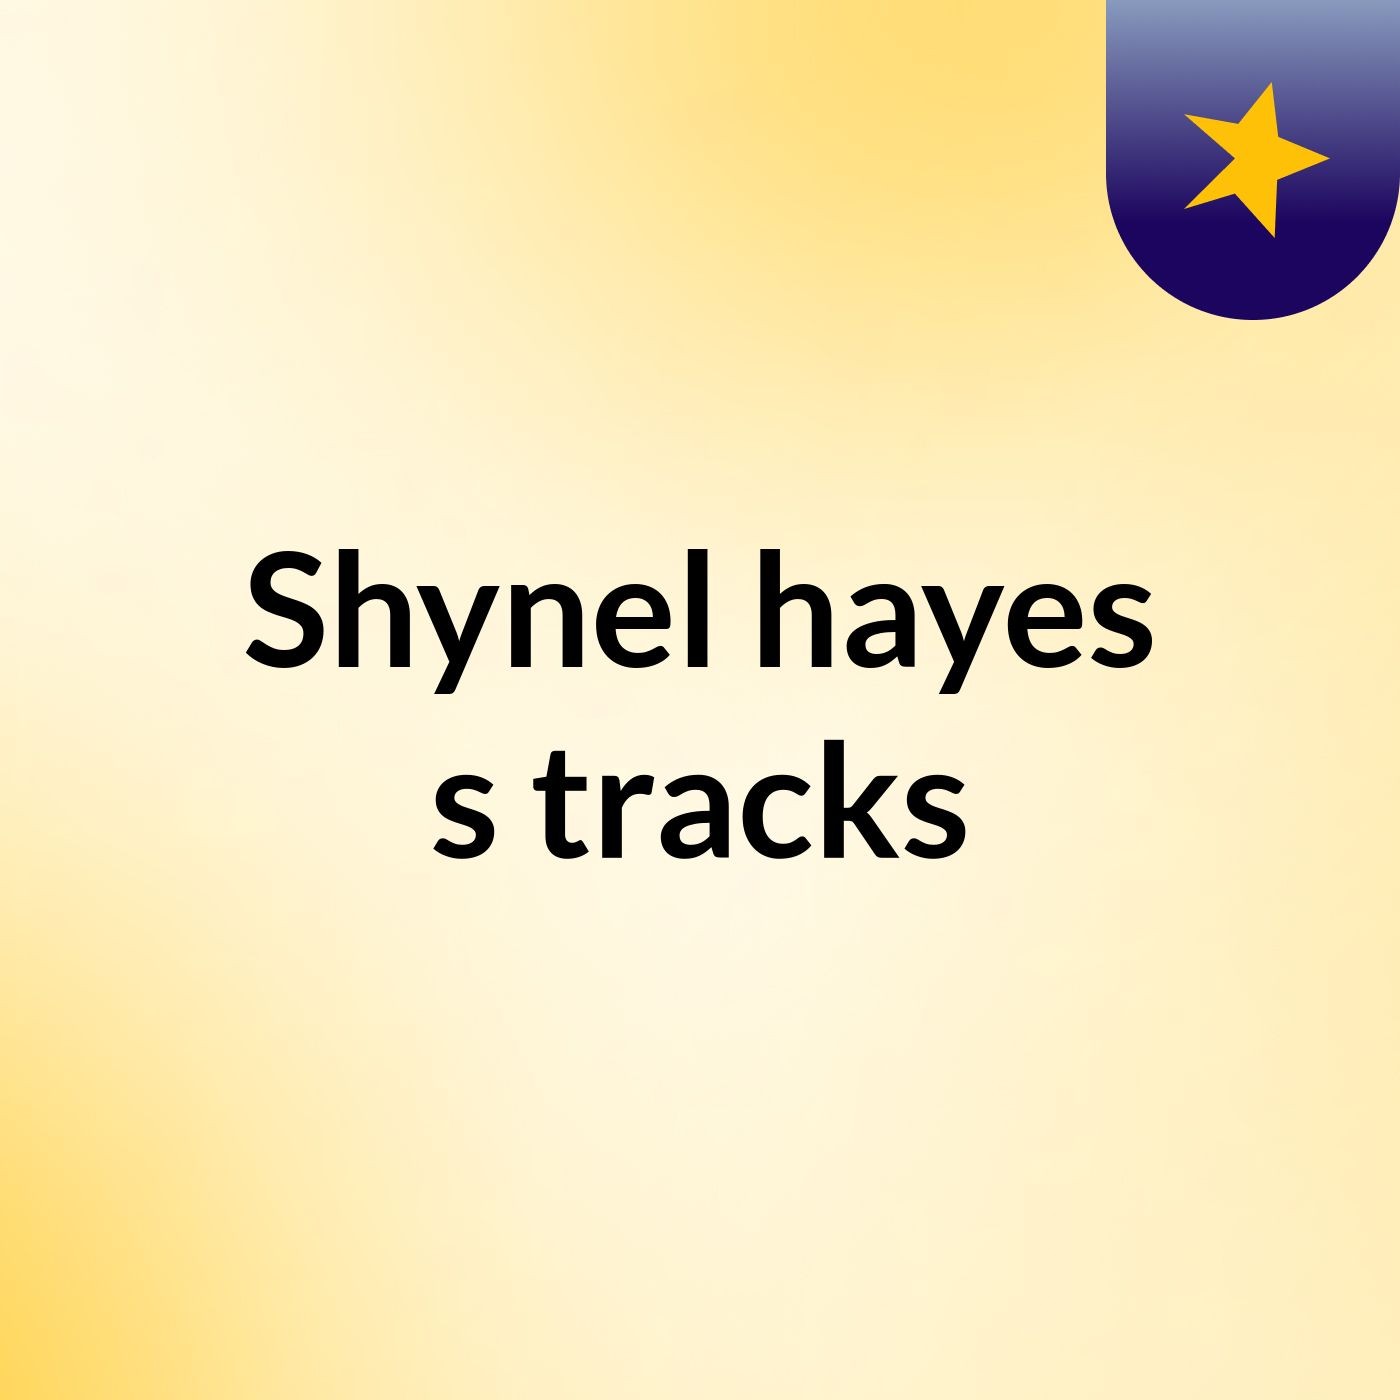 Shynel hayes's tracks